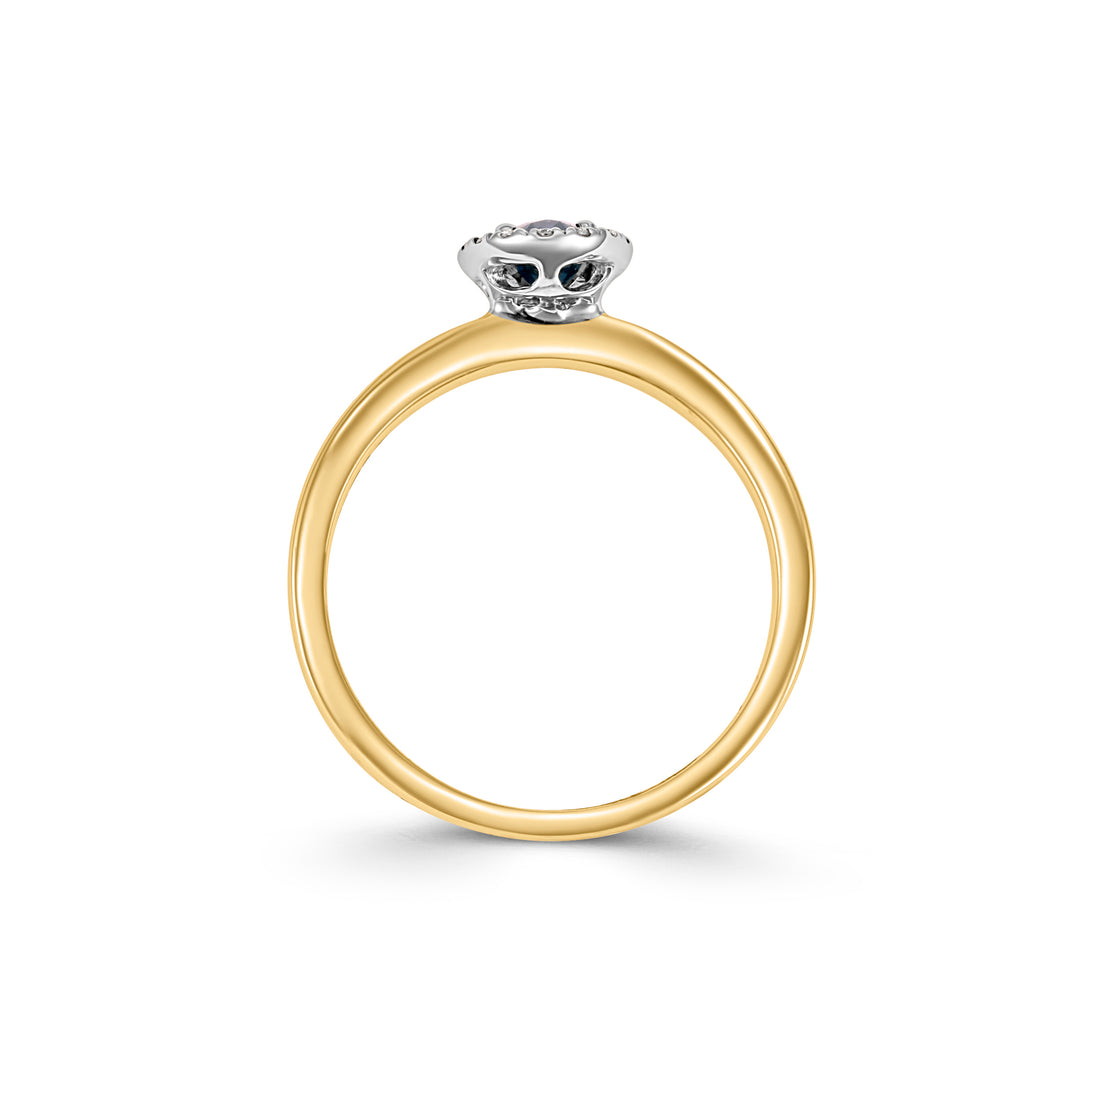 18ct Yellow Gold Sapphire and Diamond Halo Ring - Robert Anthony Jewellers, Edinburgh